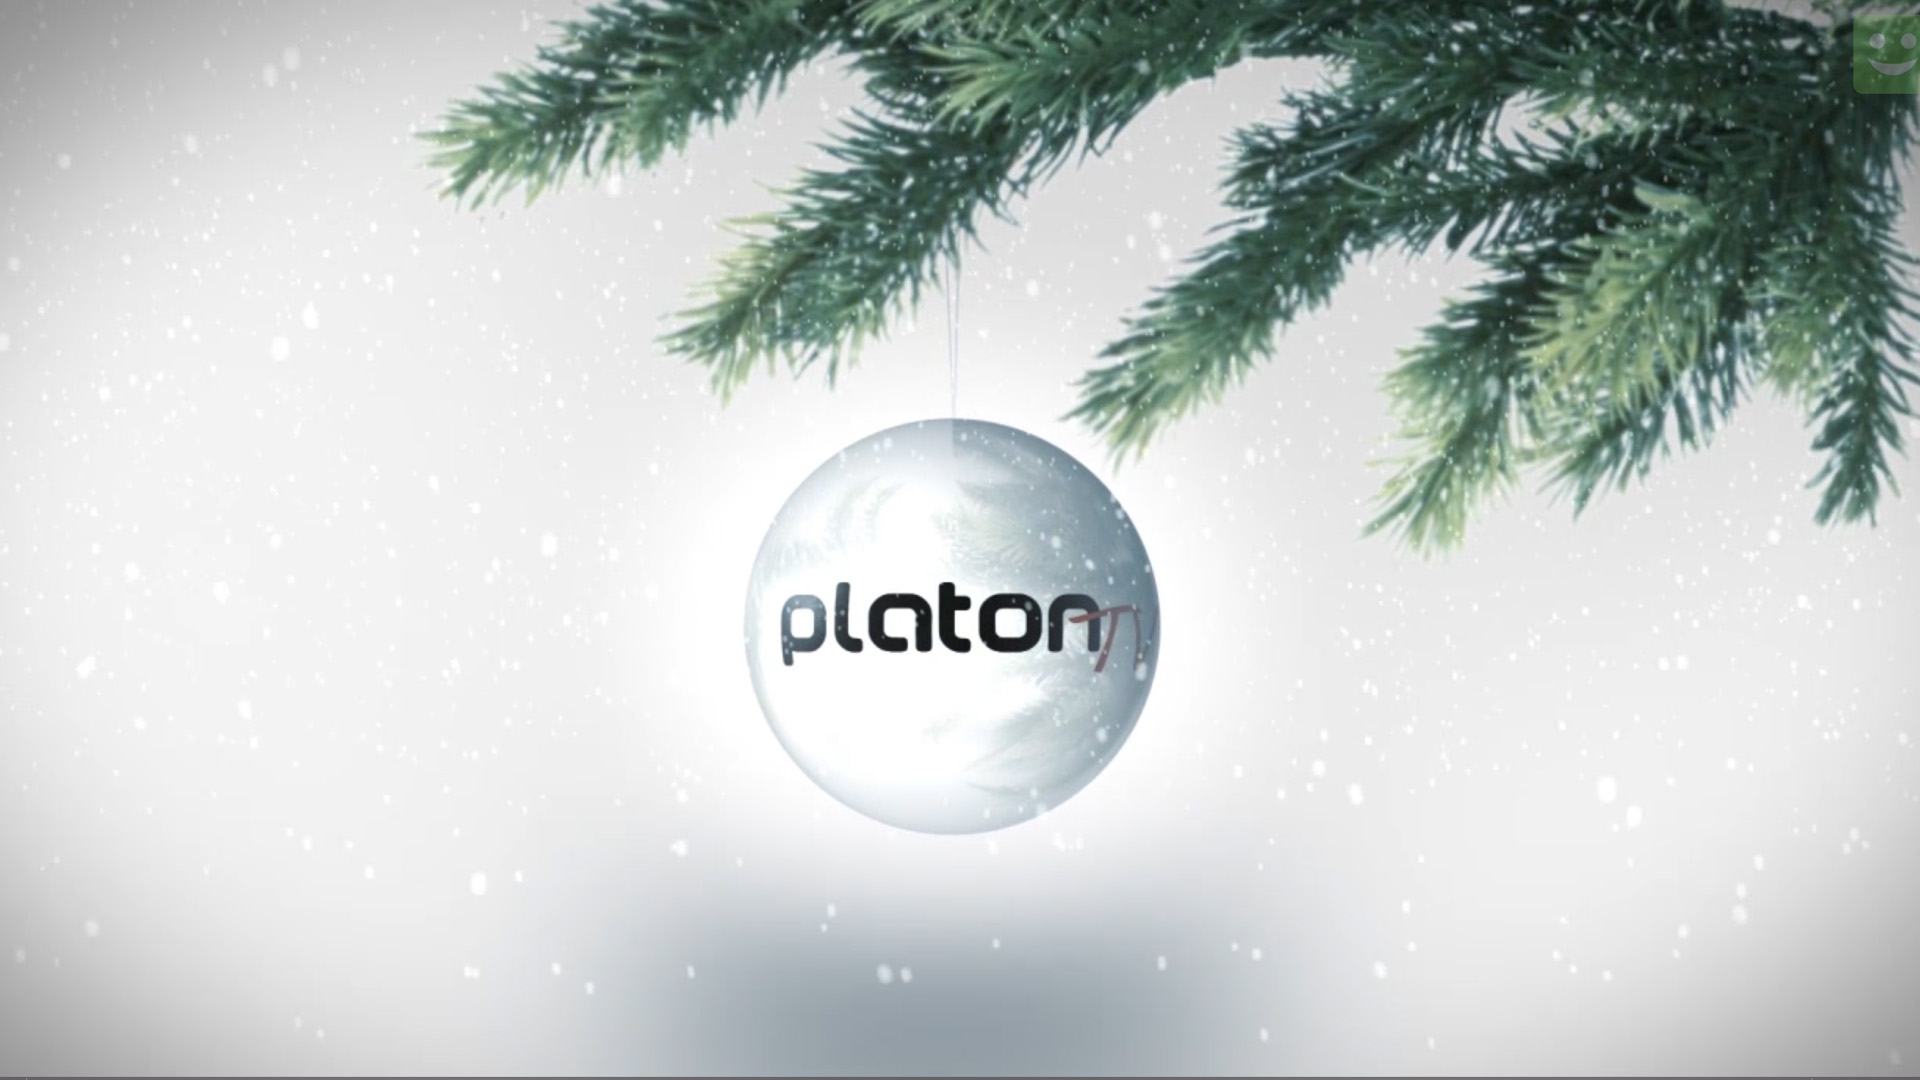 PlatonTV Flash: świątecznie